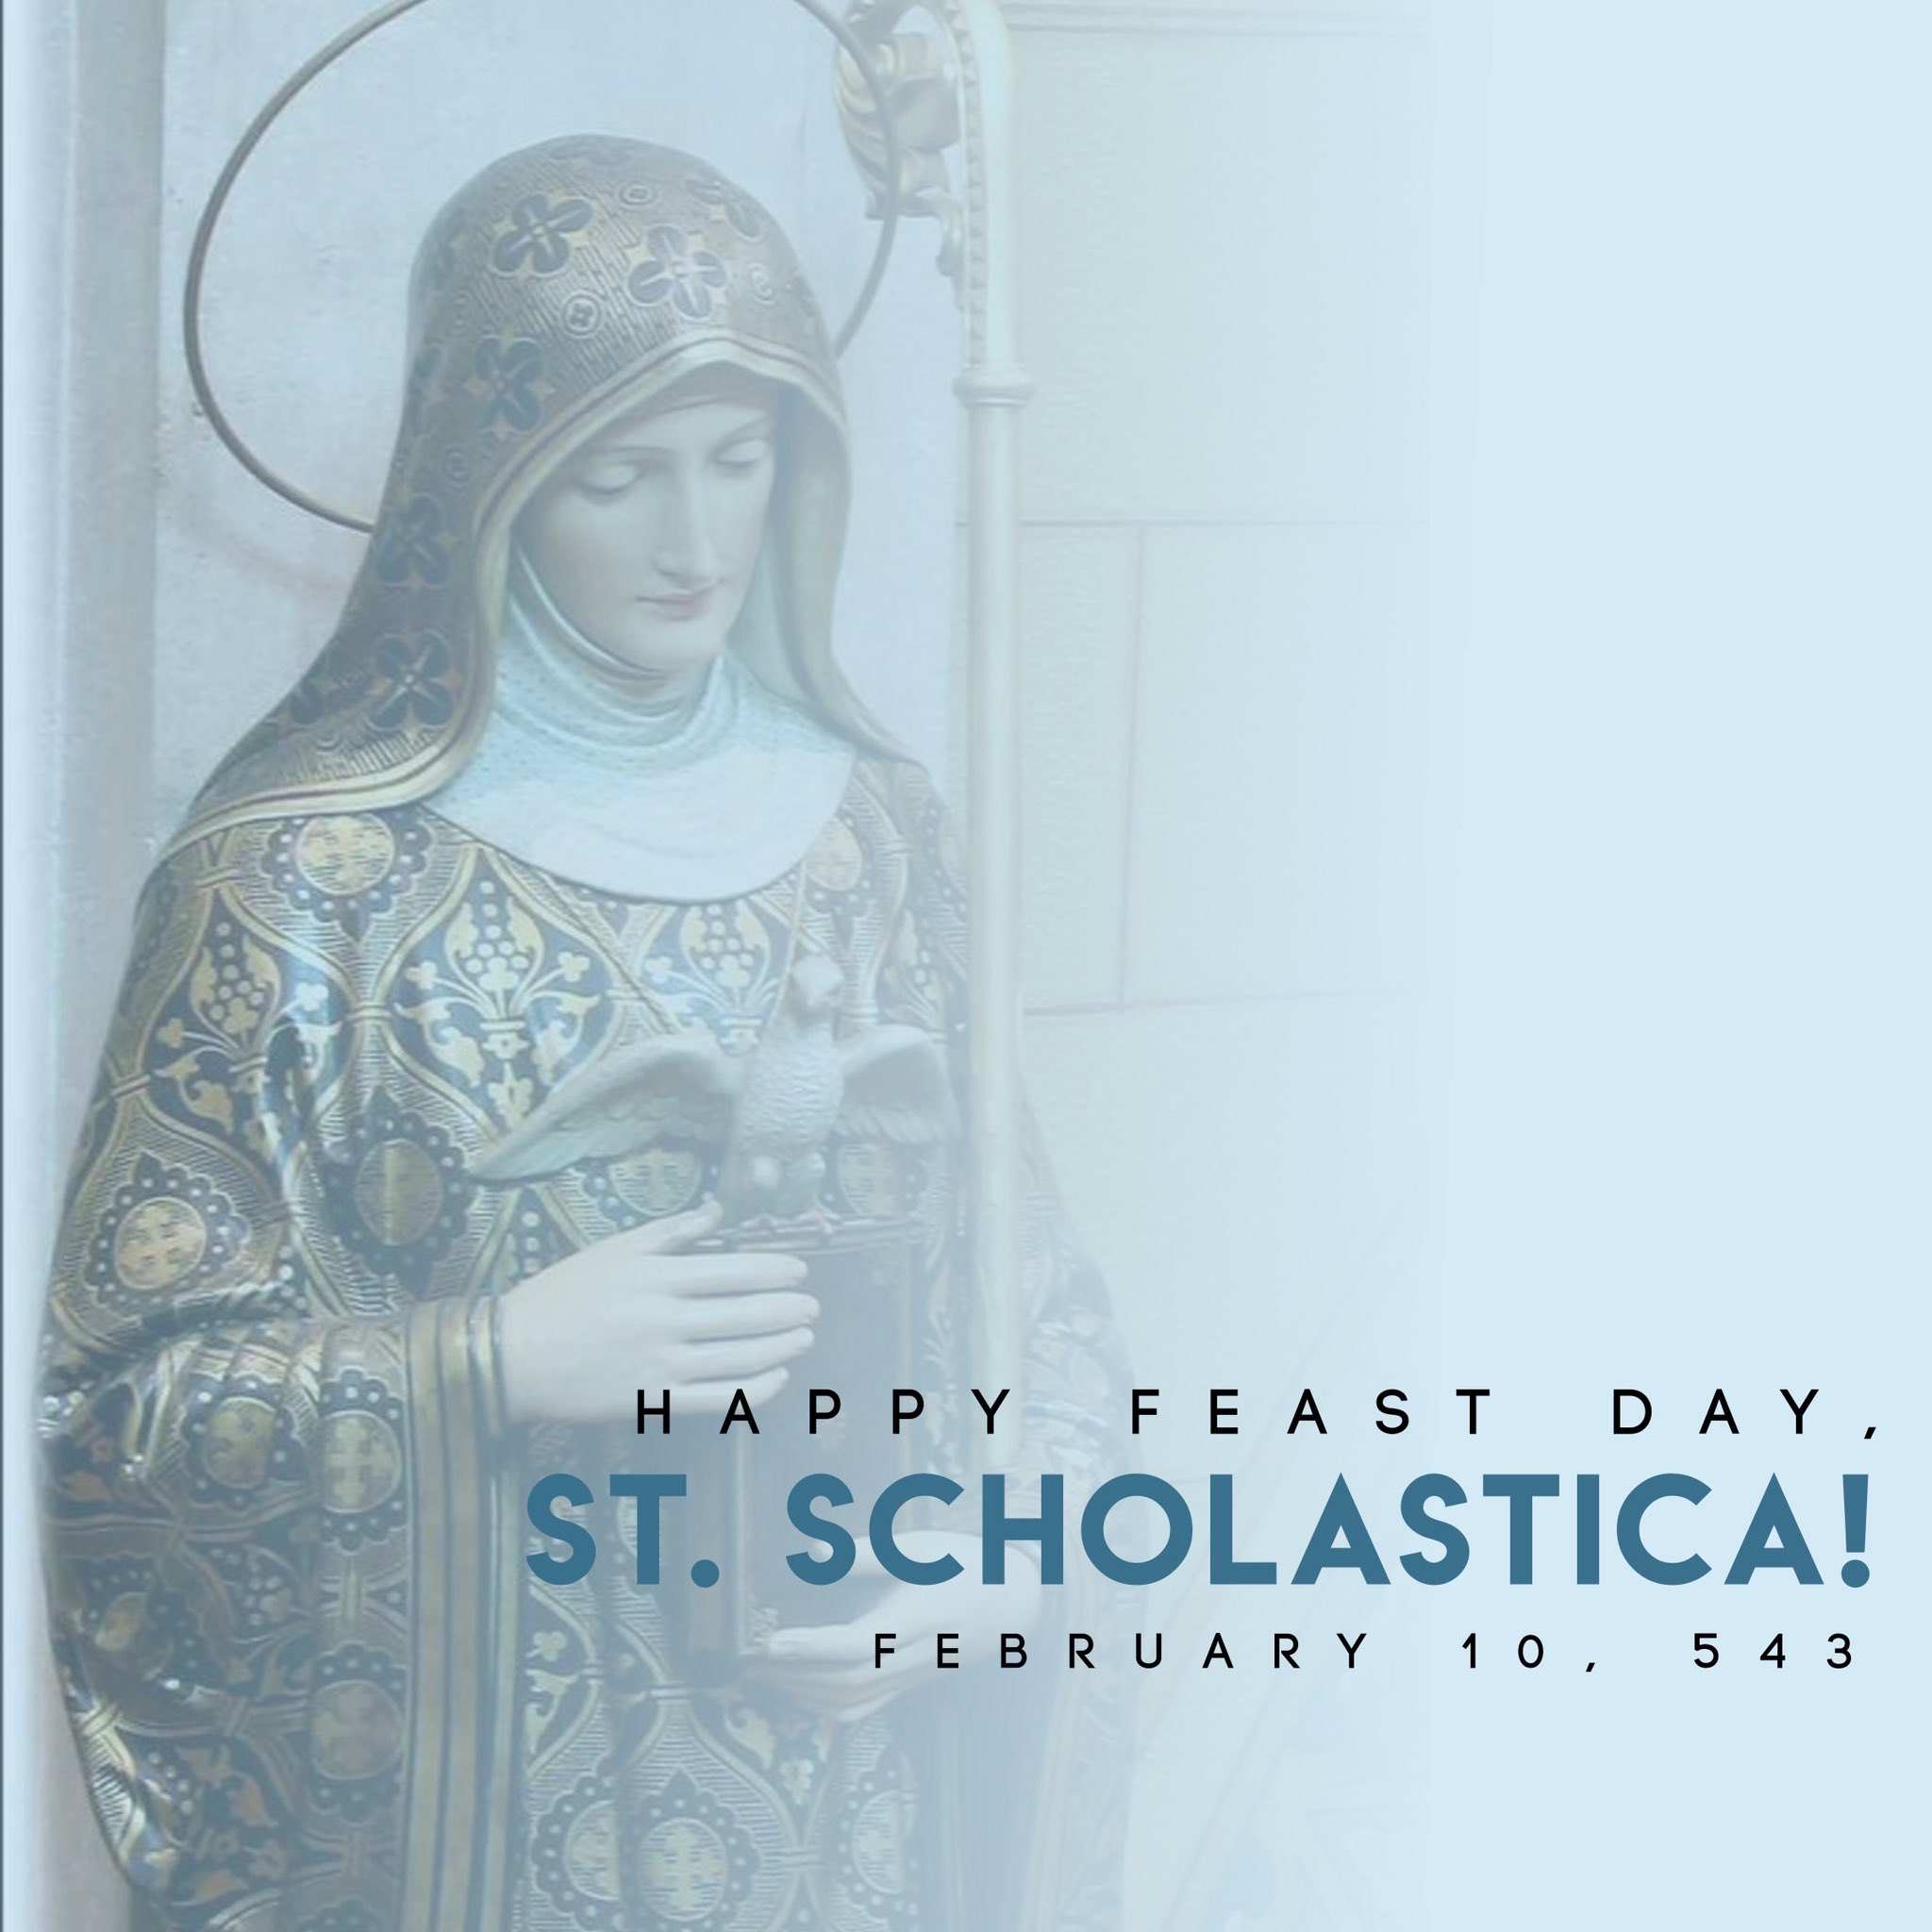 St. Scholastica: Feb 10